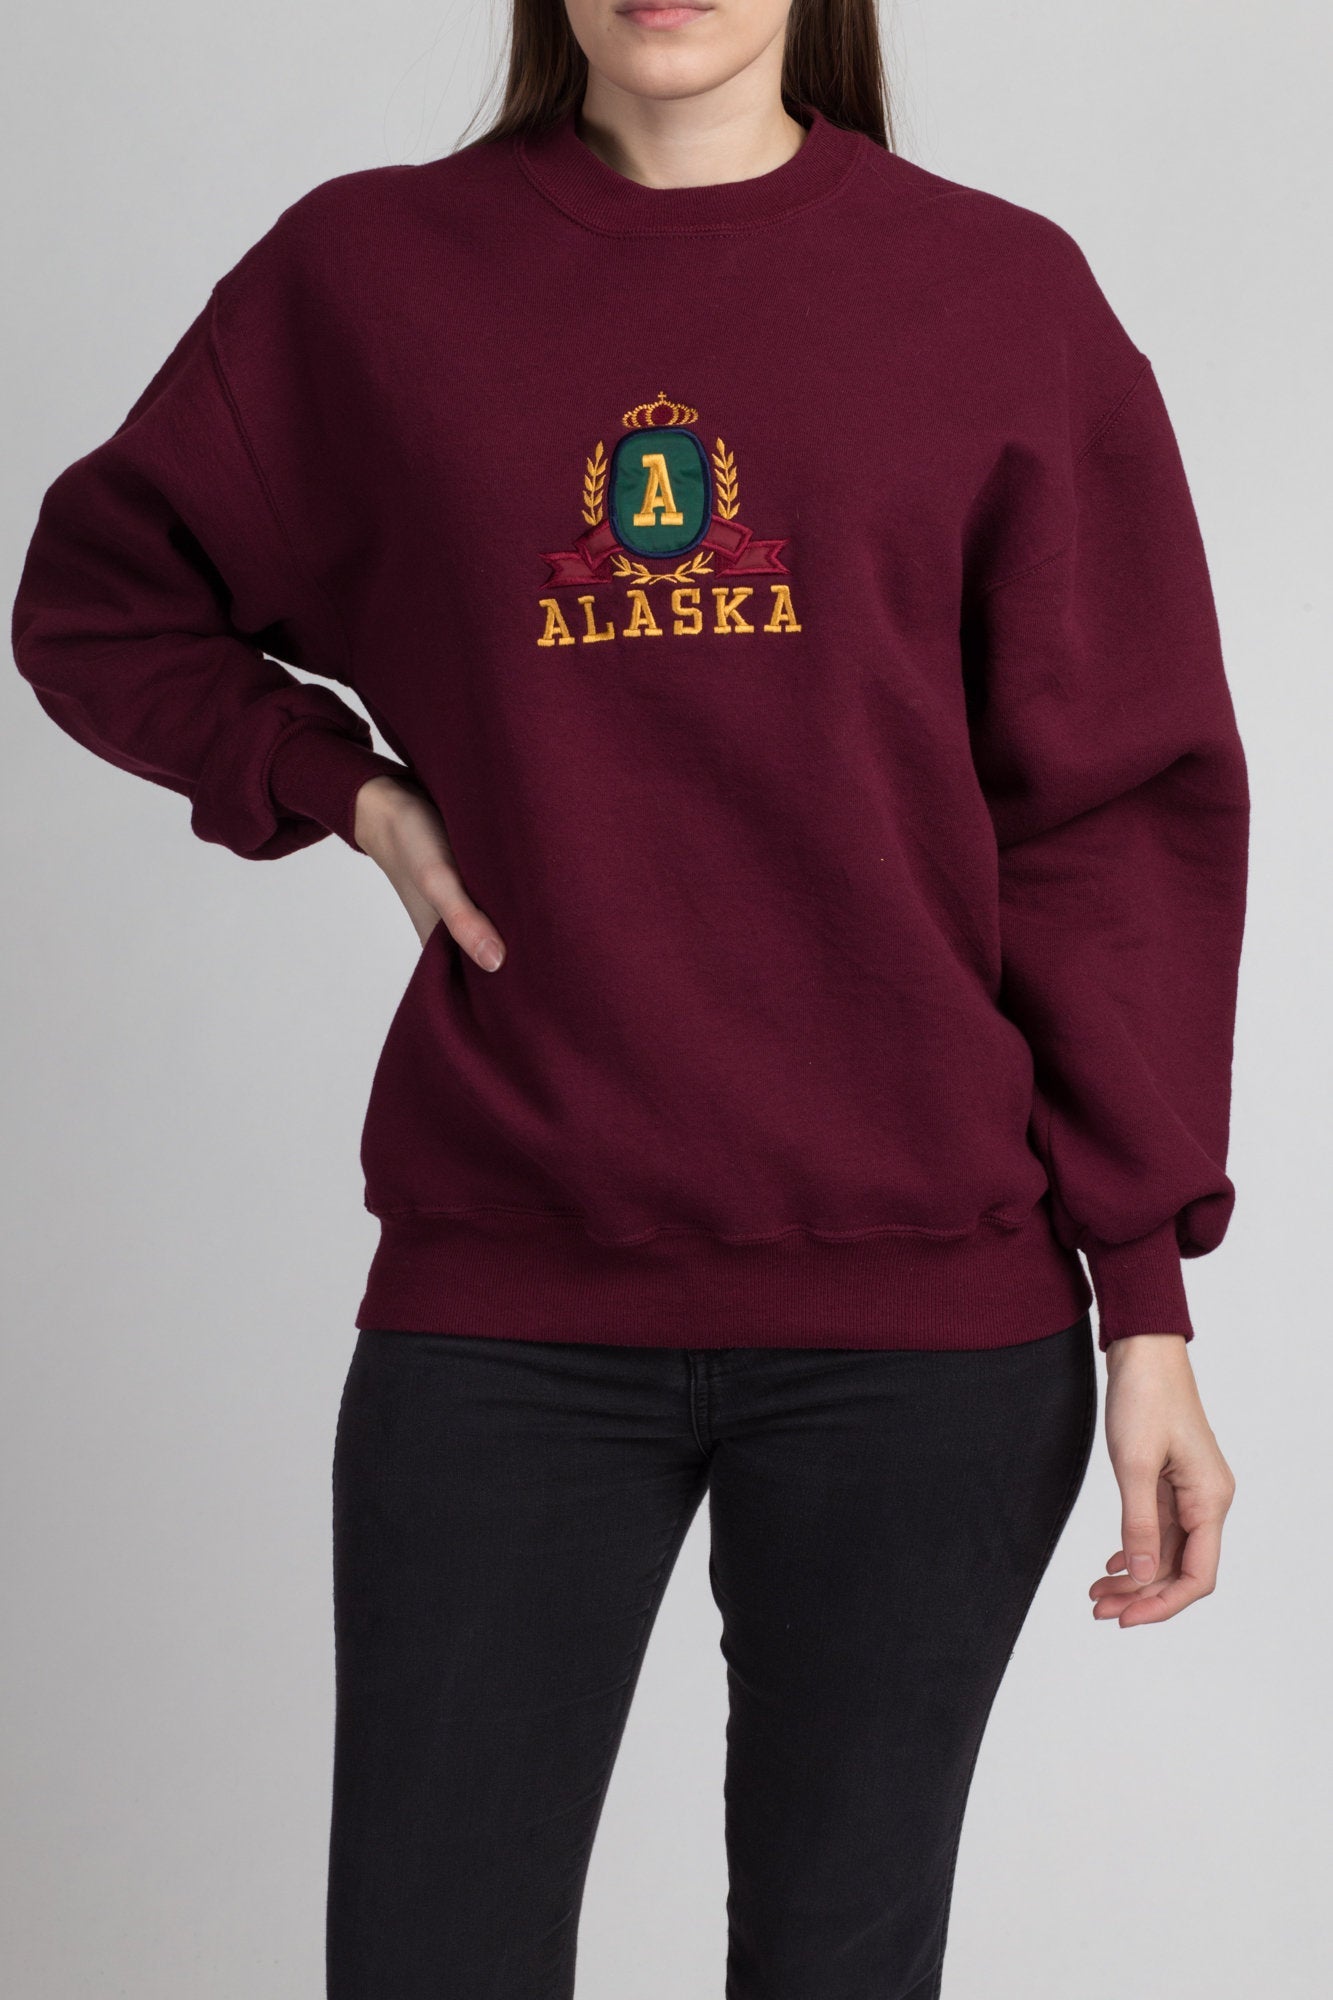 90s Alaska Sweatshirt - Men's Medium, Women's Large